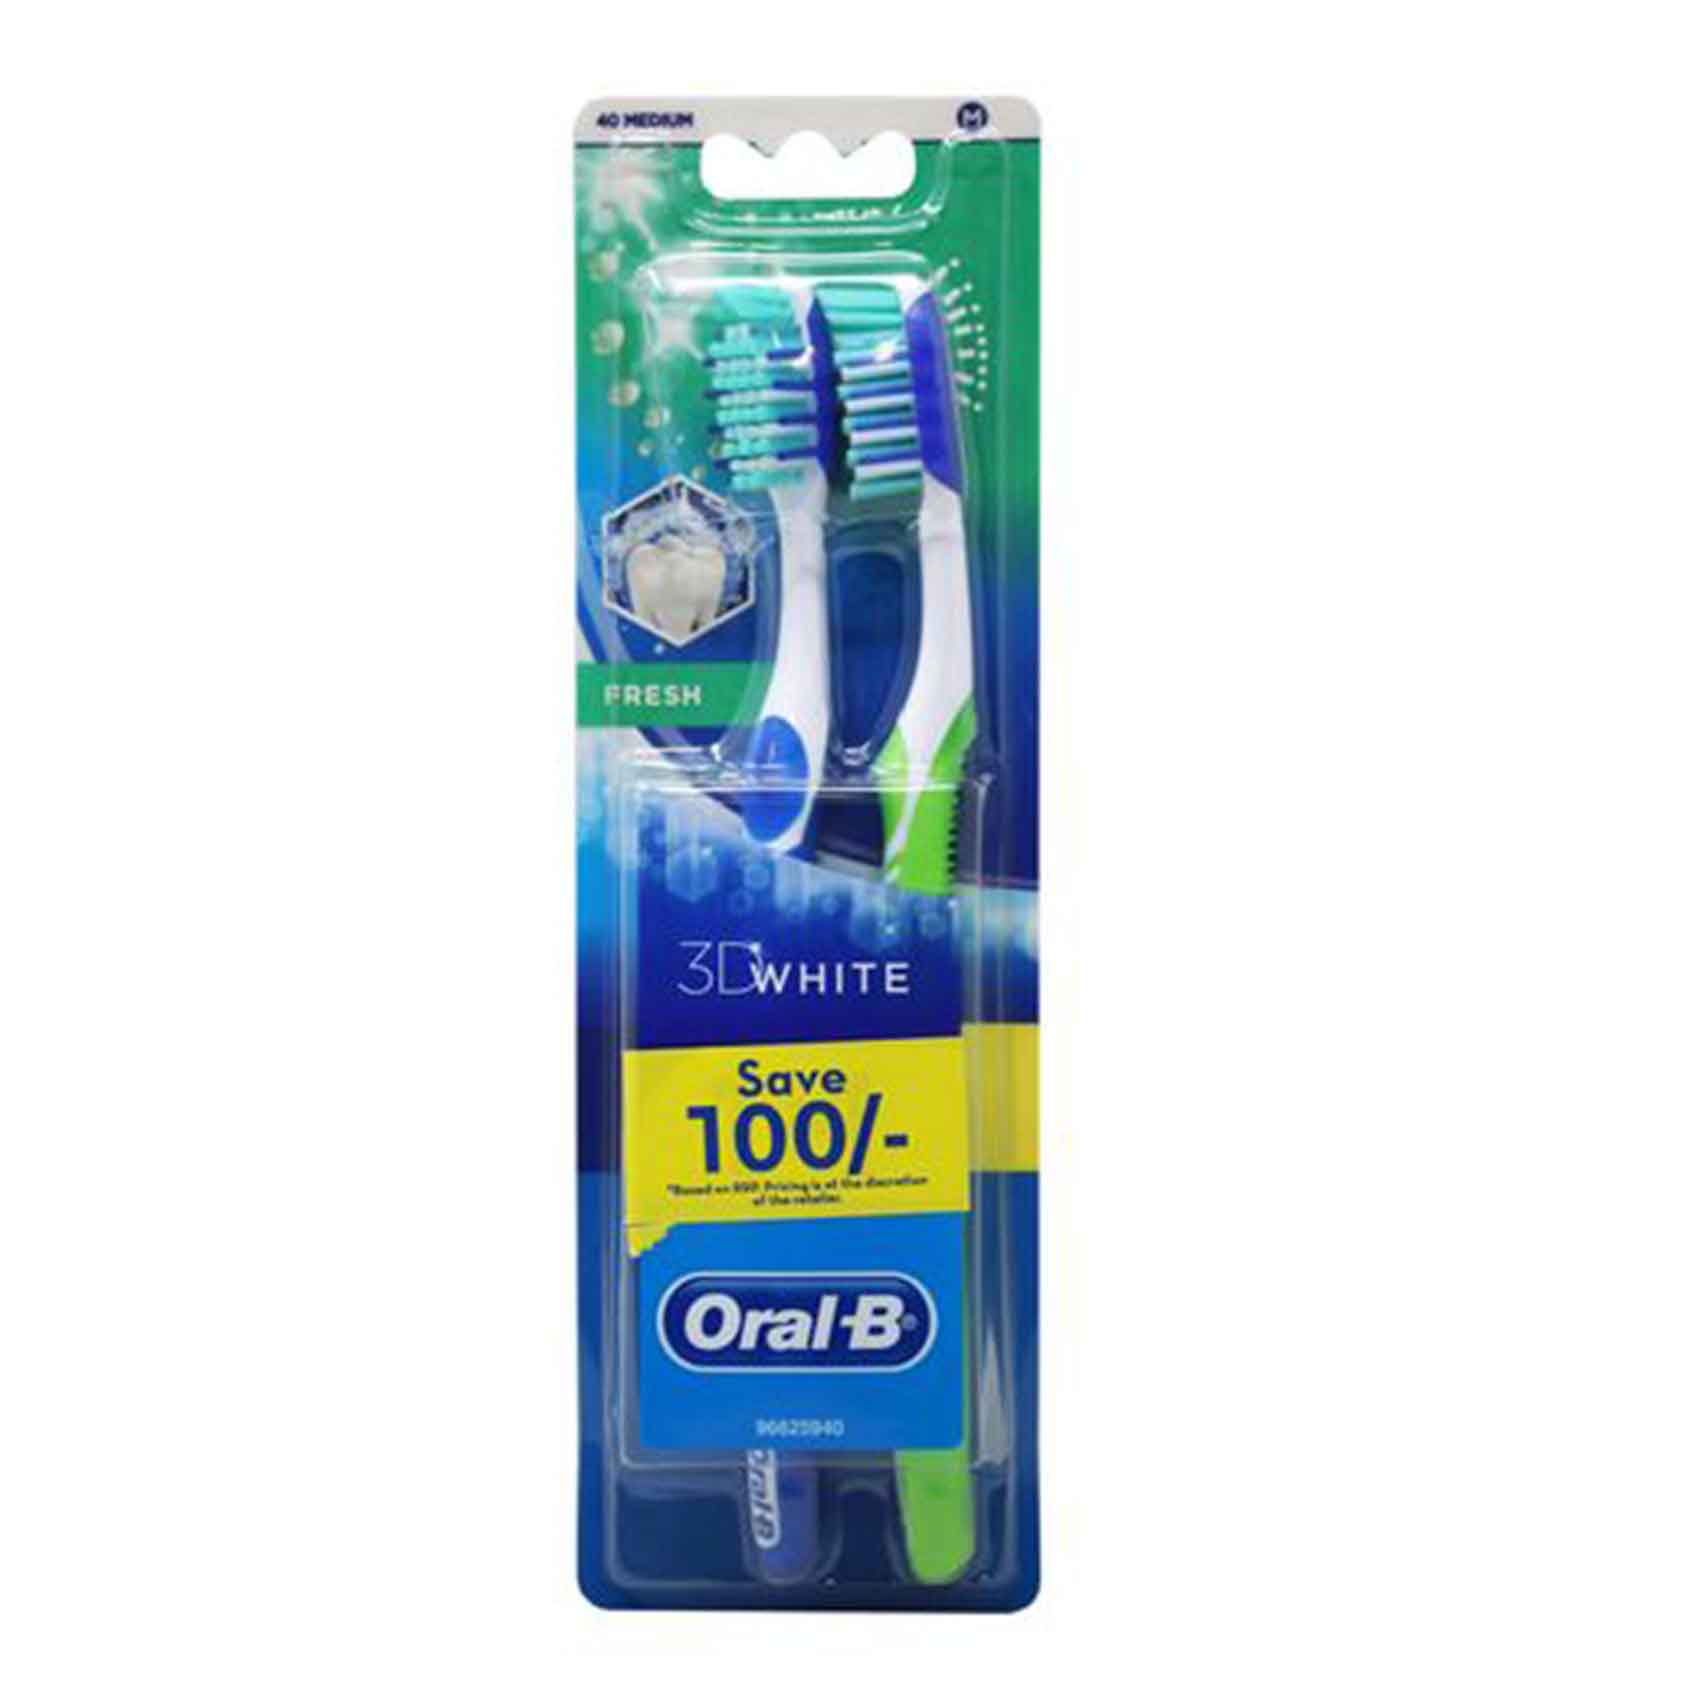 Oral B Advanced 3D White Toothbrush Promo 1 + 1 Piece Free